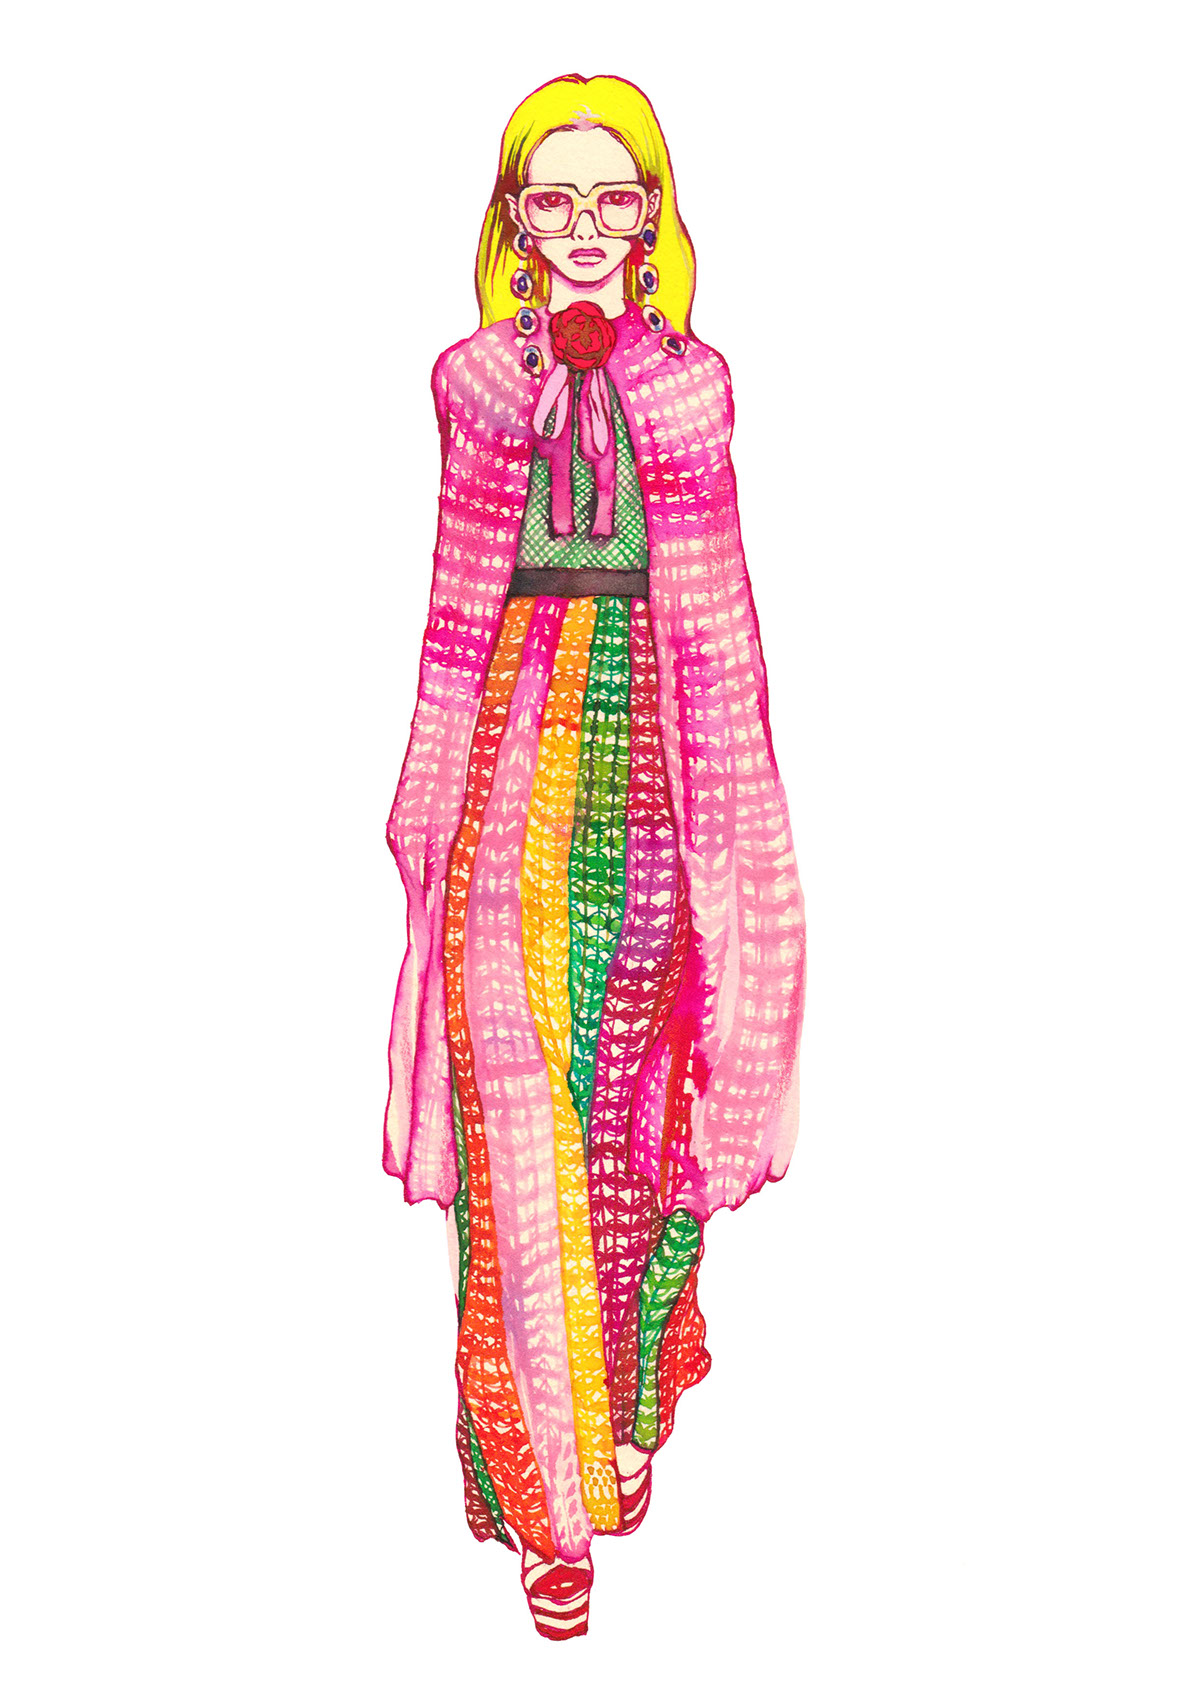 Dunhill gucci fendi pringle of scotland katie eary ss16 fashion week fashion illustration ink pencil model colours art pastel